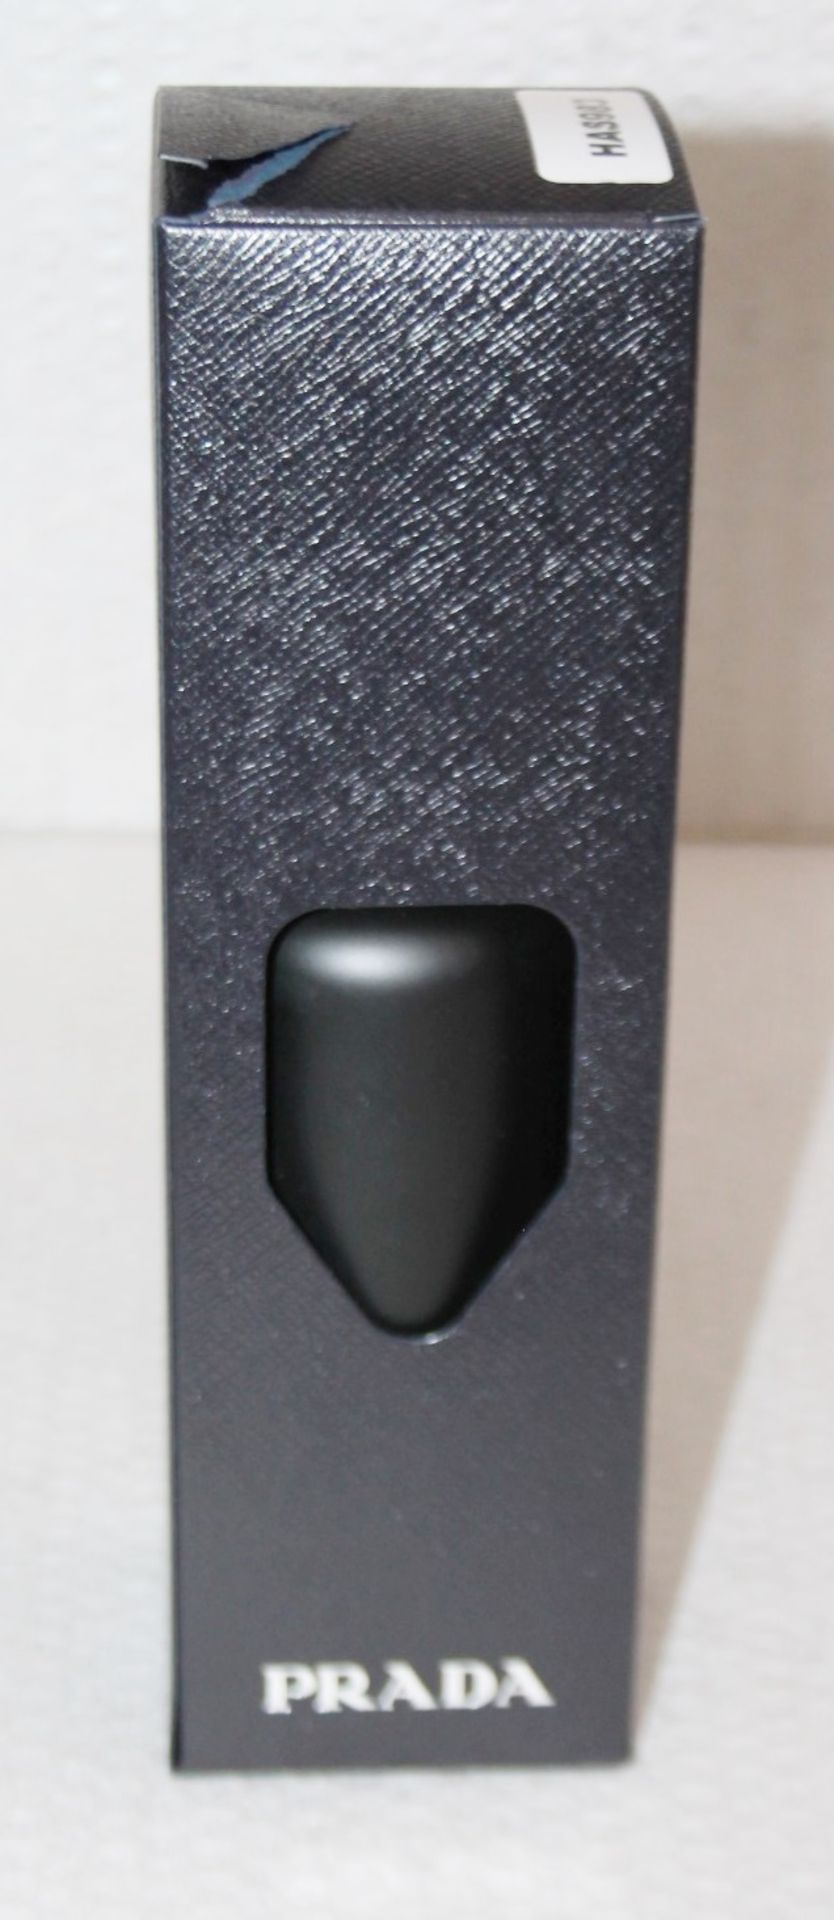 1 x PRADA Stainless Steel Water Bottle In Black, 500 ml - Original Price £100.00 - Image 8 of 8